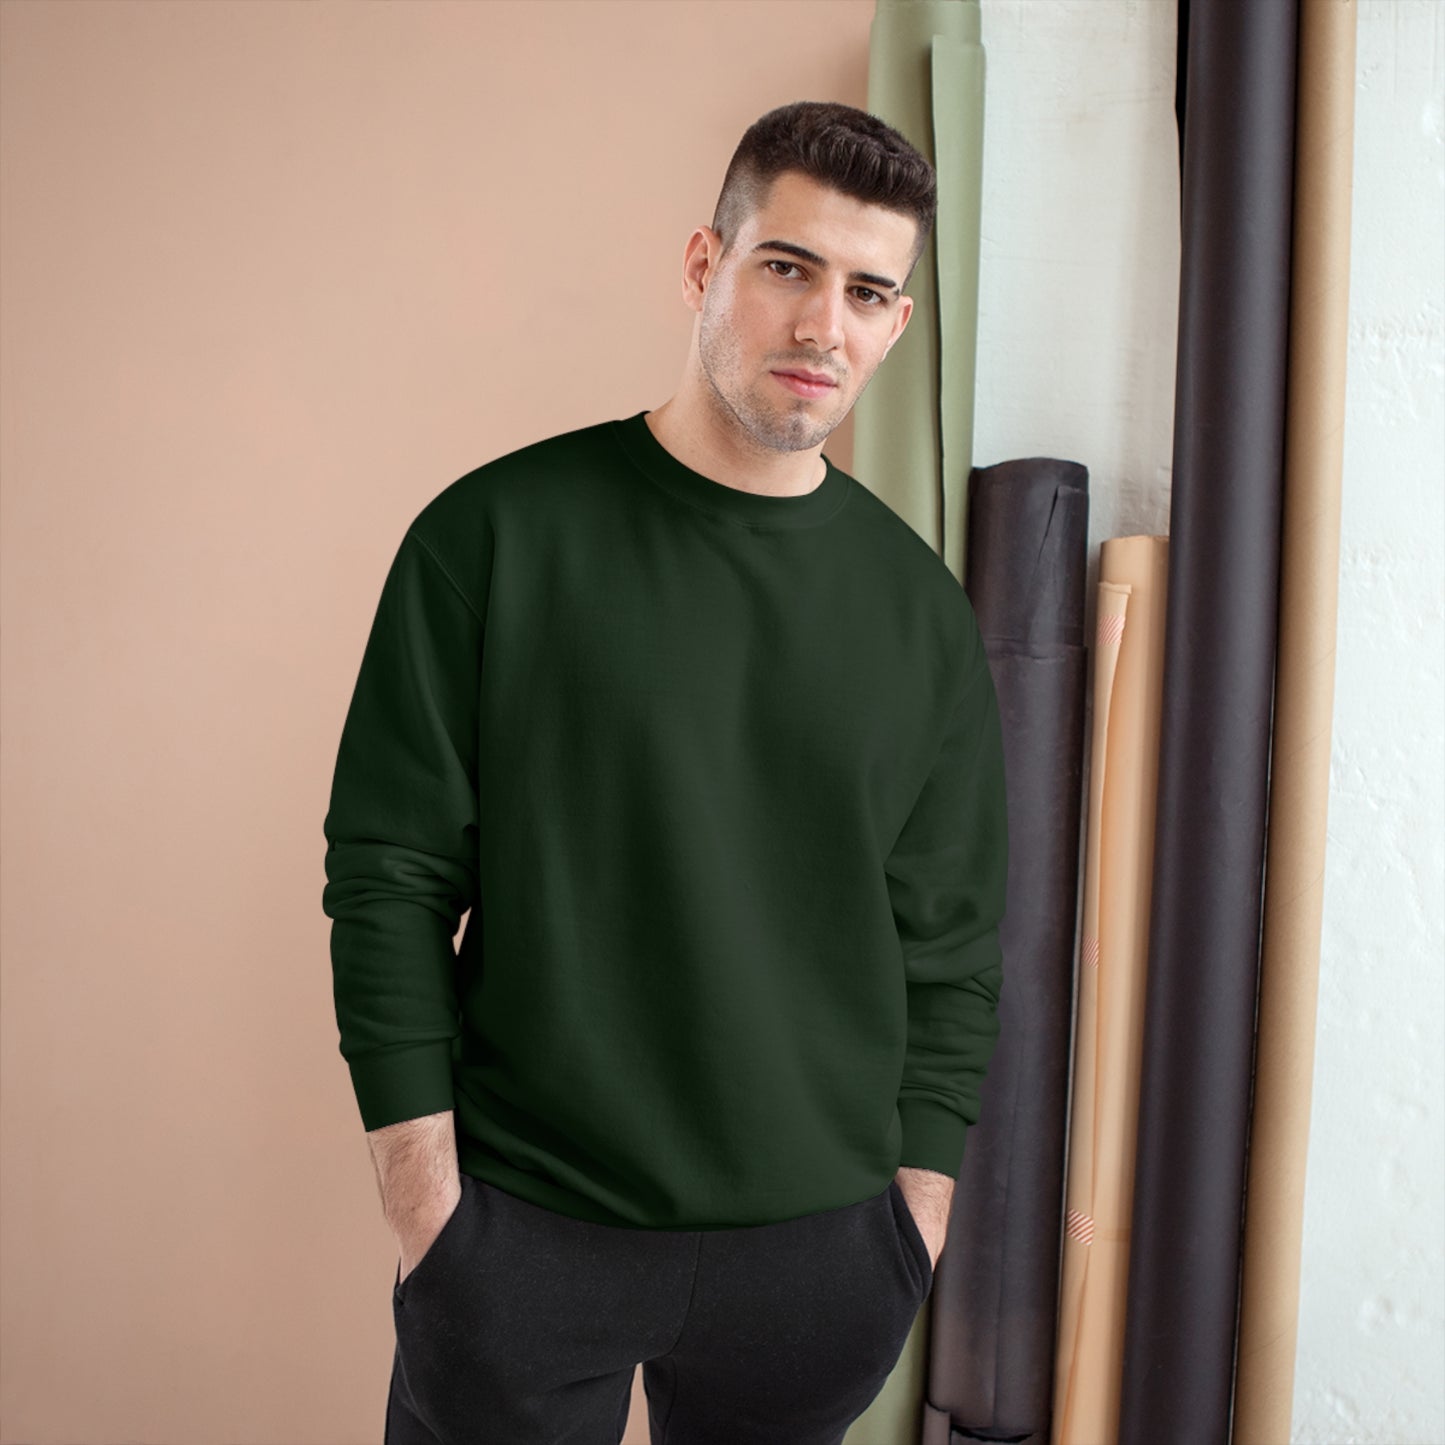 man with a bottle green sweatshirt